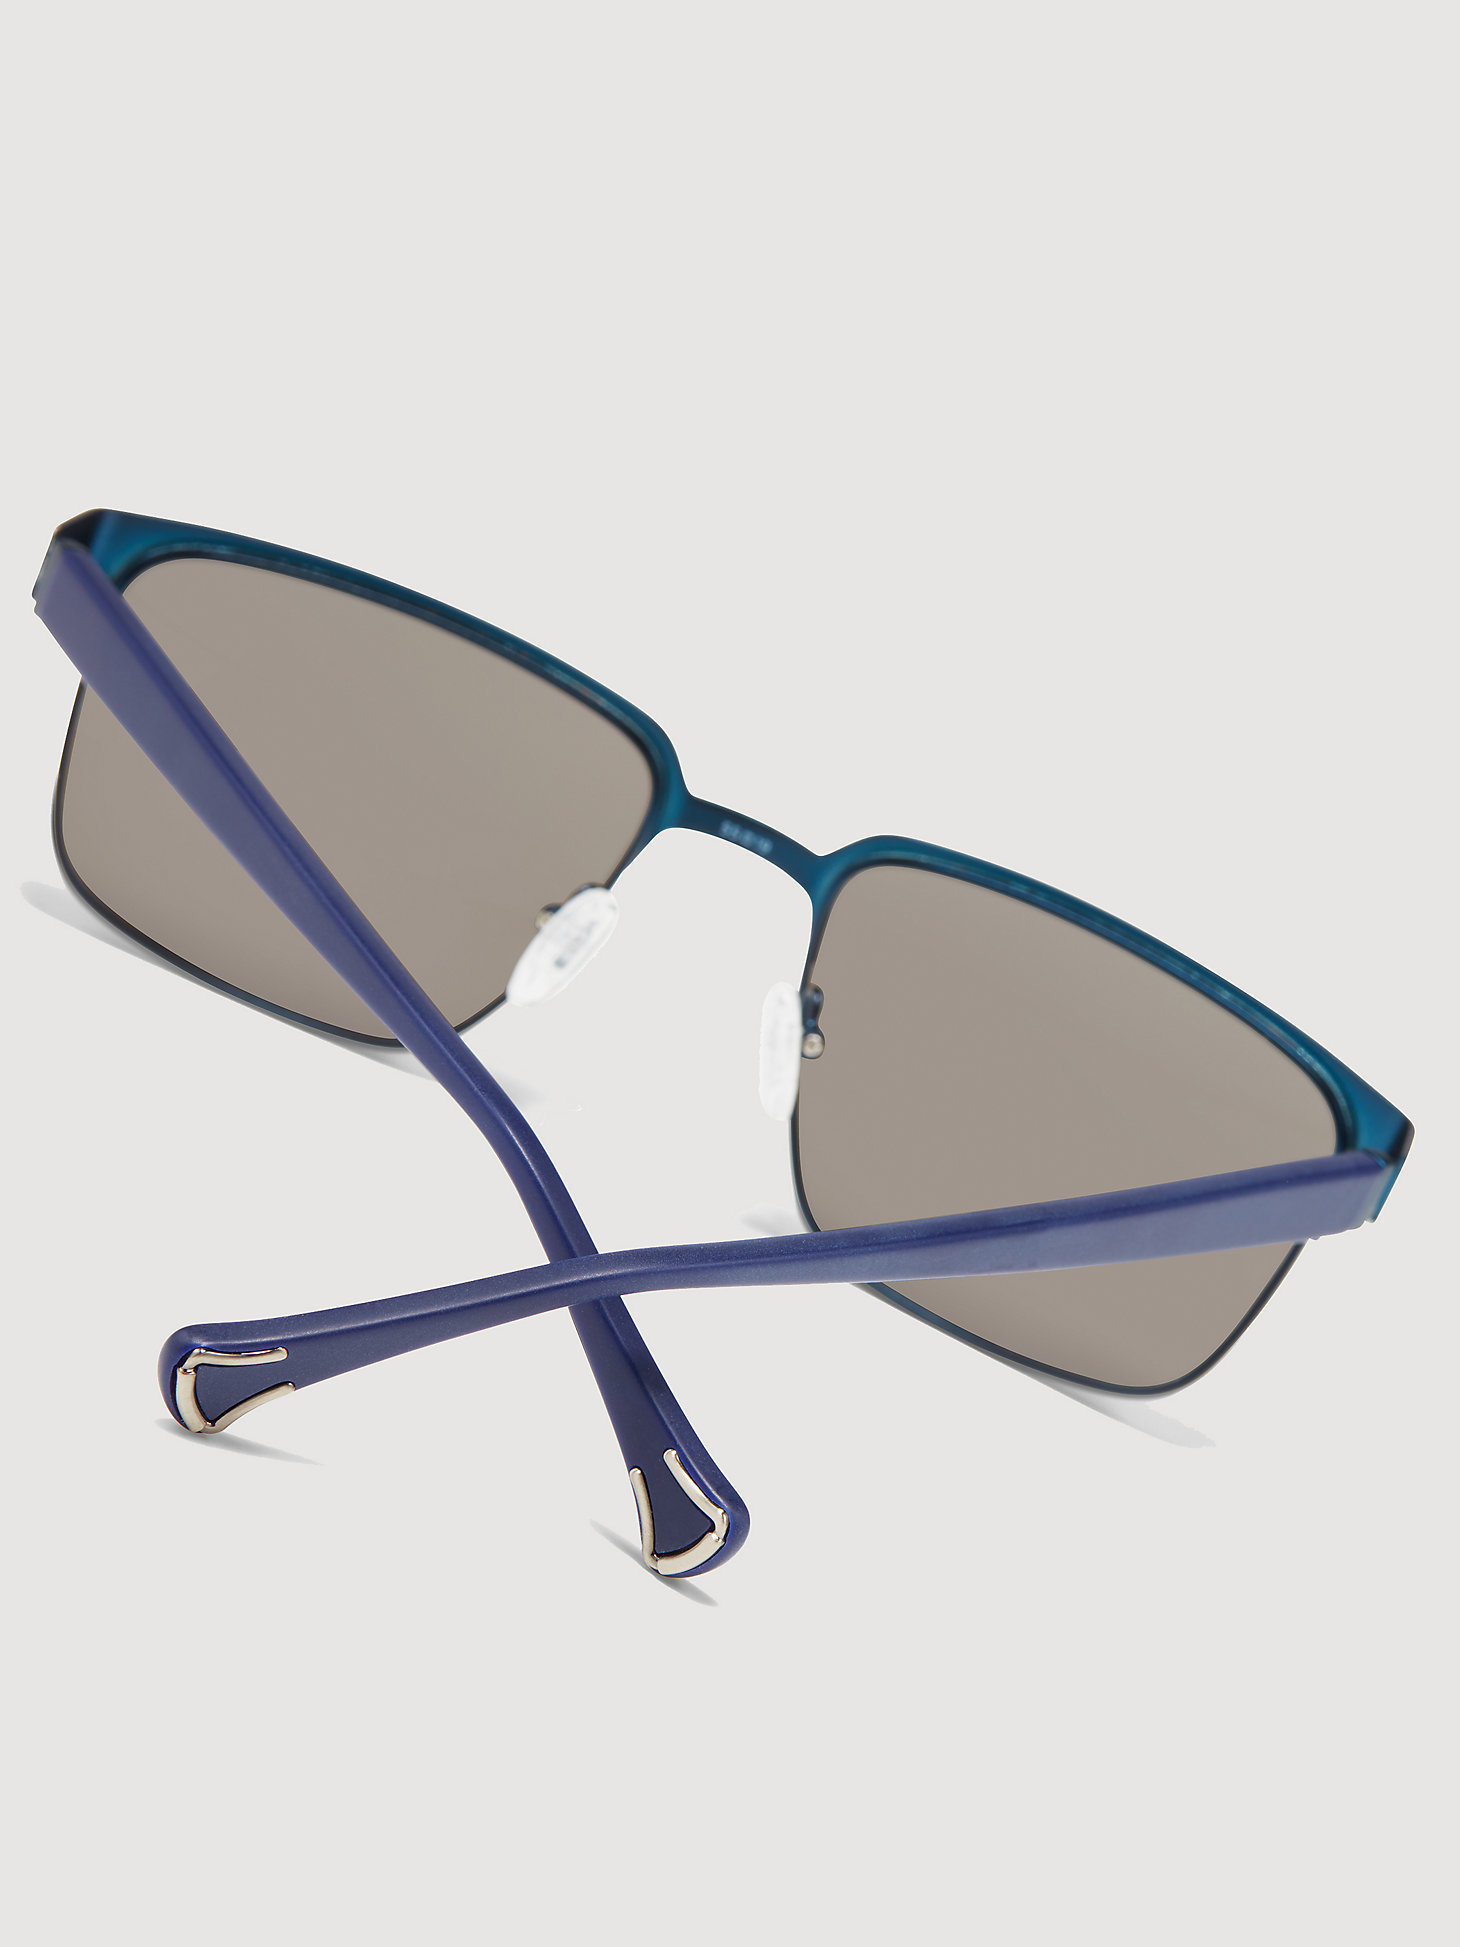 Men's Rectangle Sunglasses in Blue alternative view 1